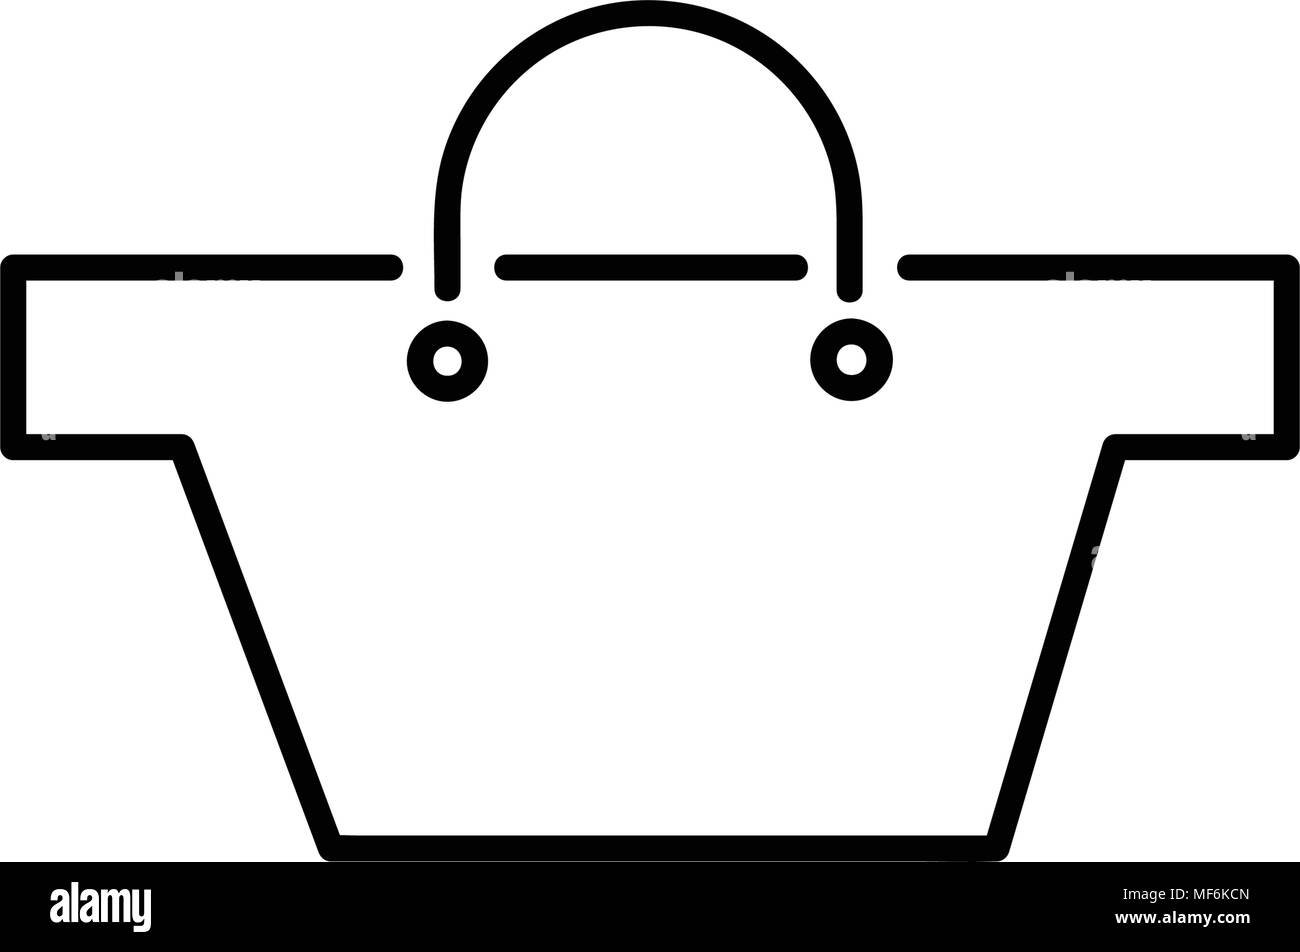 Shopping basket icon, isolated on white background Stock Vector